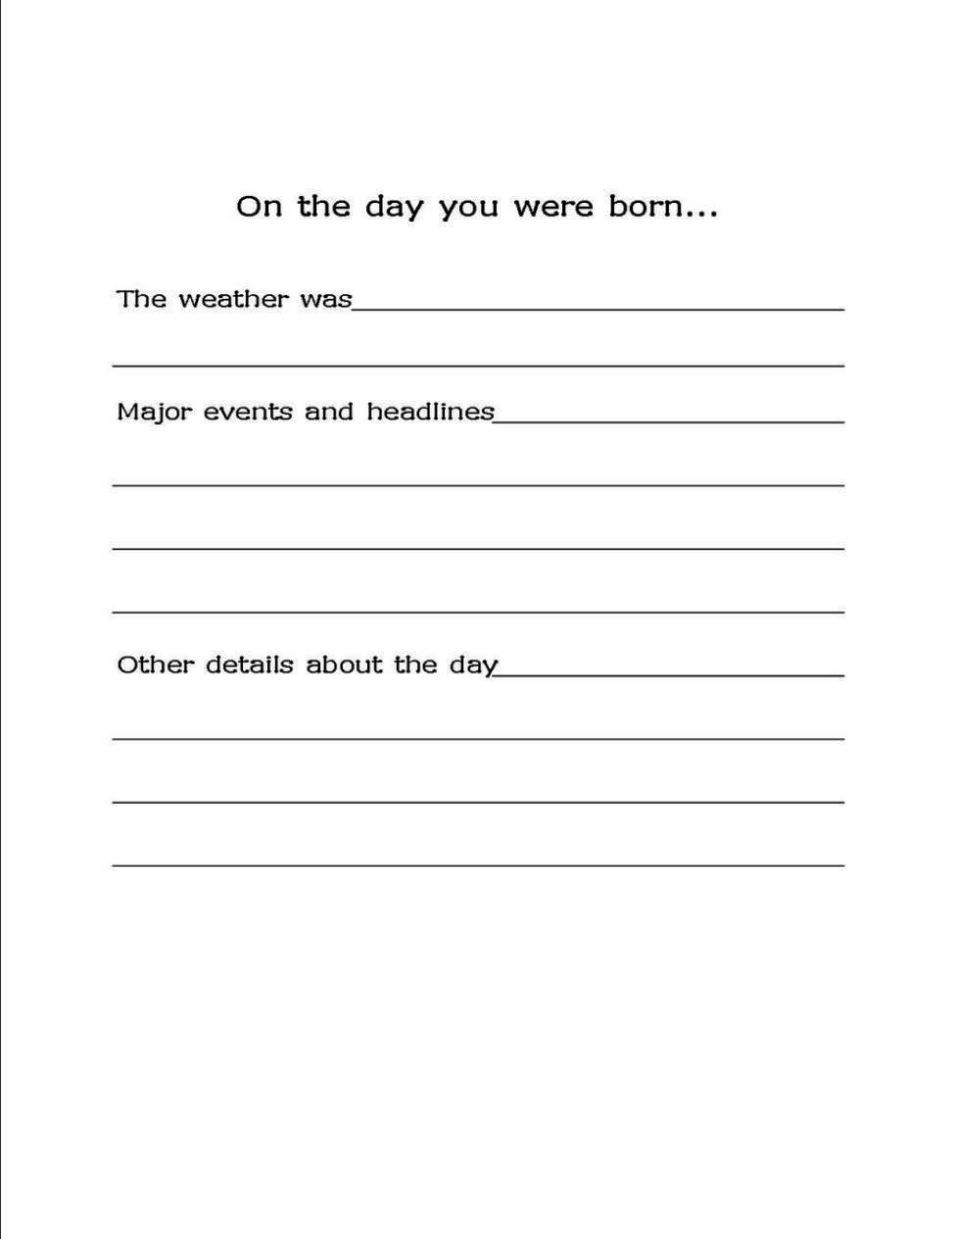 Free Printable Baby Book Templates SampleTemplatess SampleTemplatess